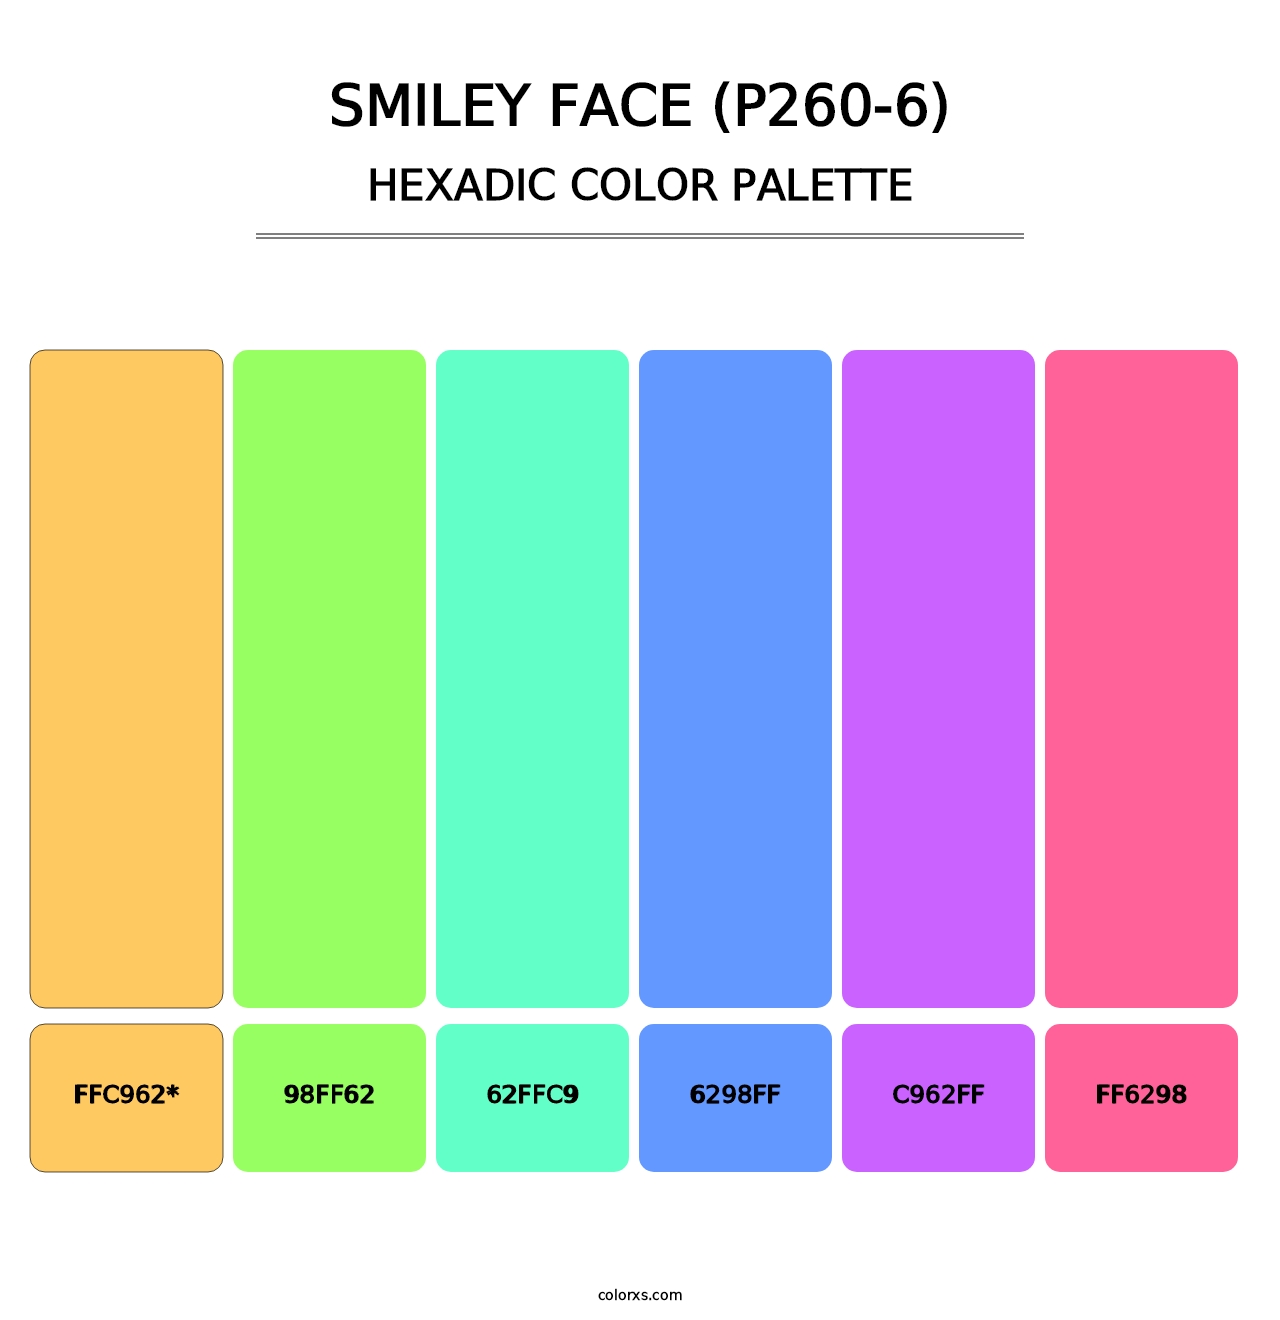 Smiley Face (P260-6) - Hexadic Color Palette